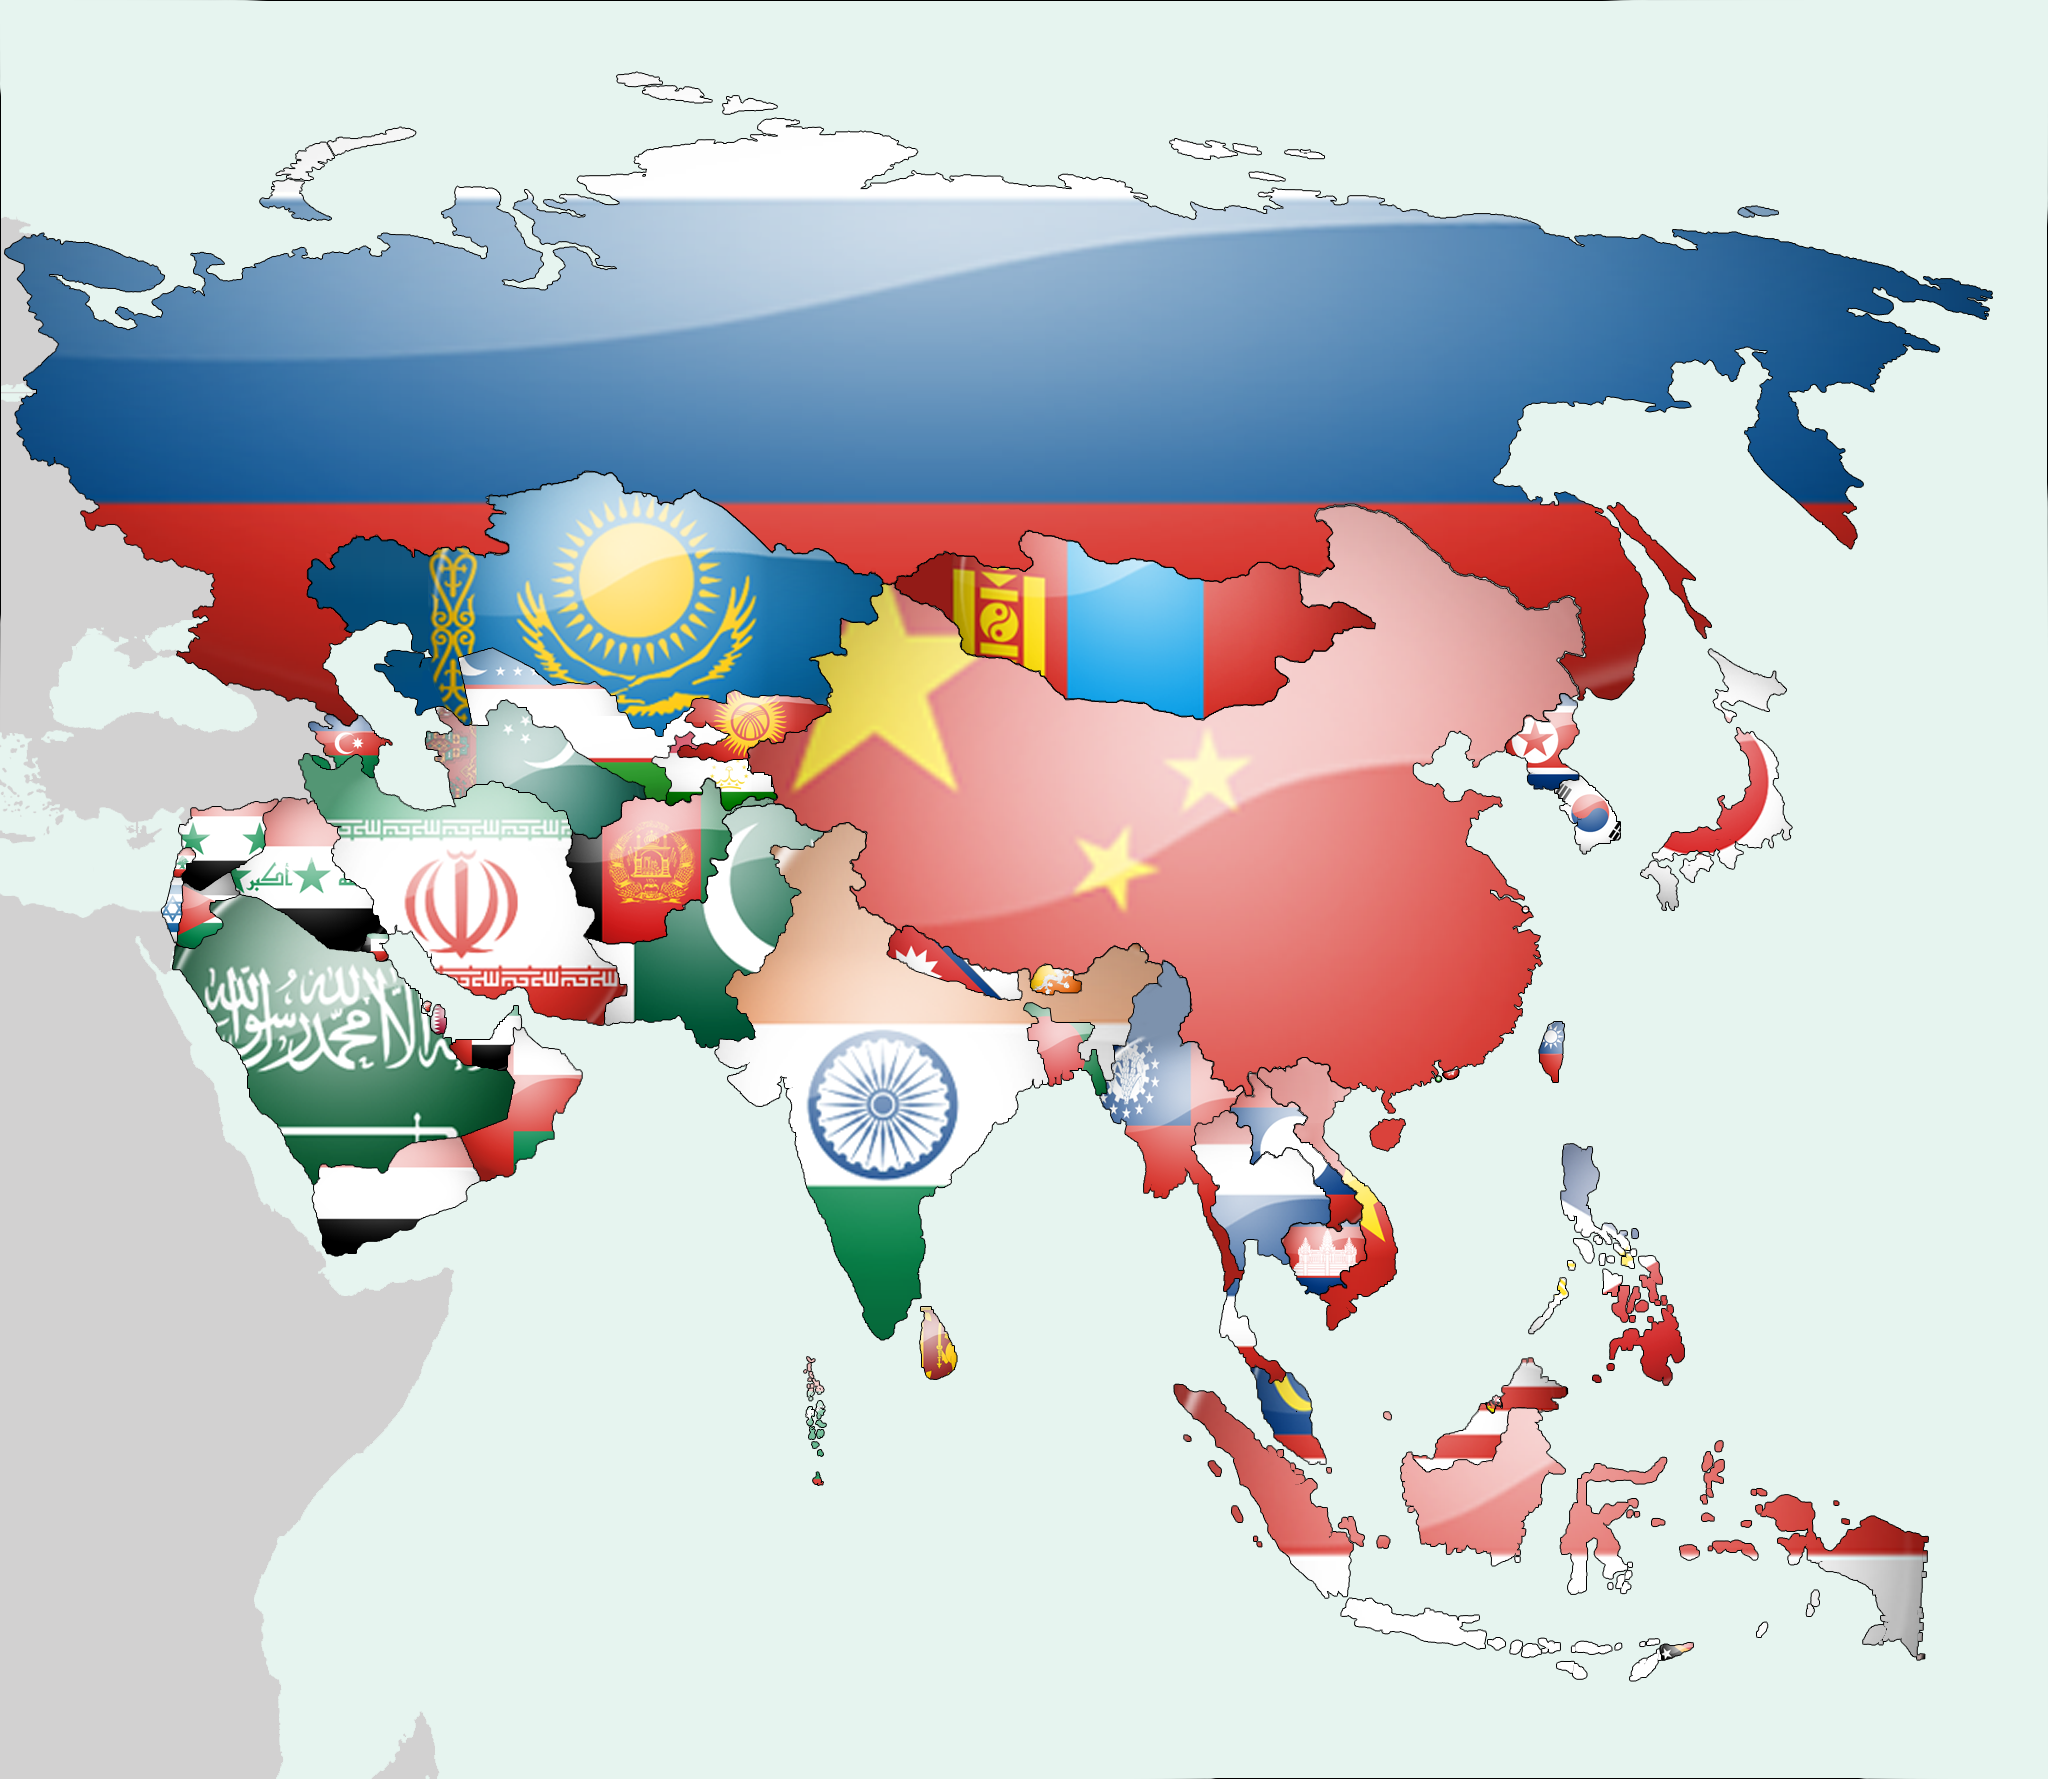 Asia Flag Map by lg-studio on DeviantArt